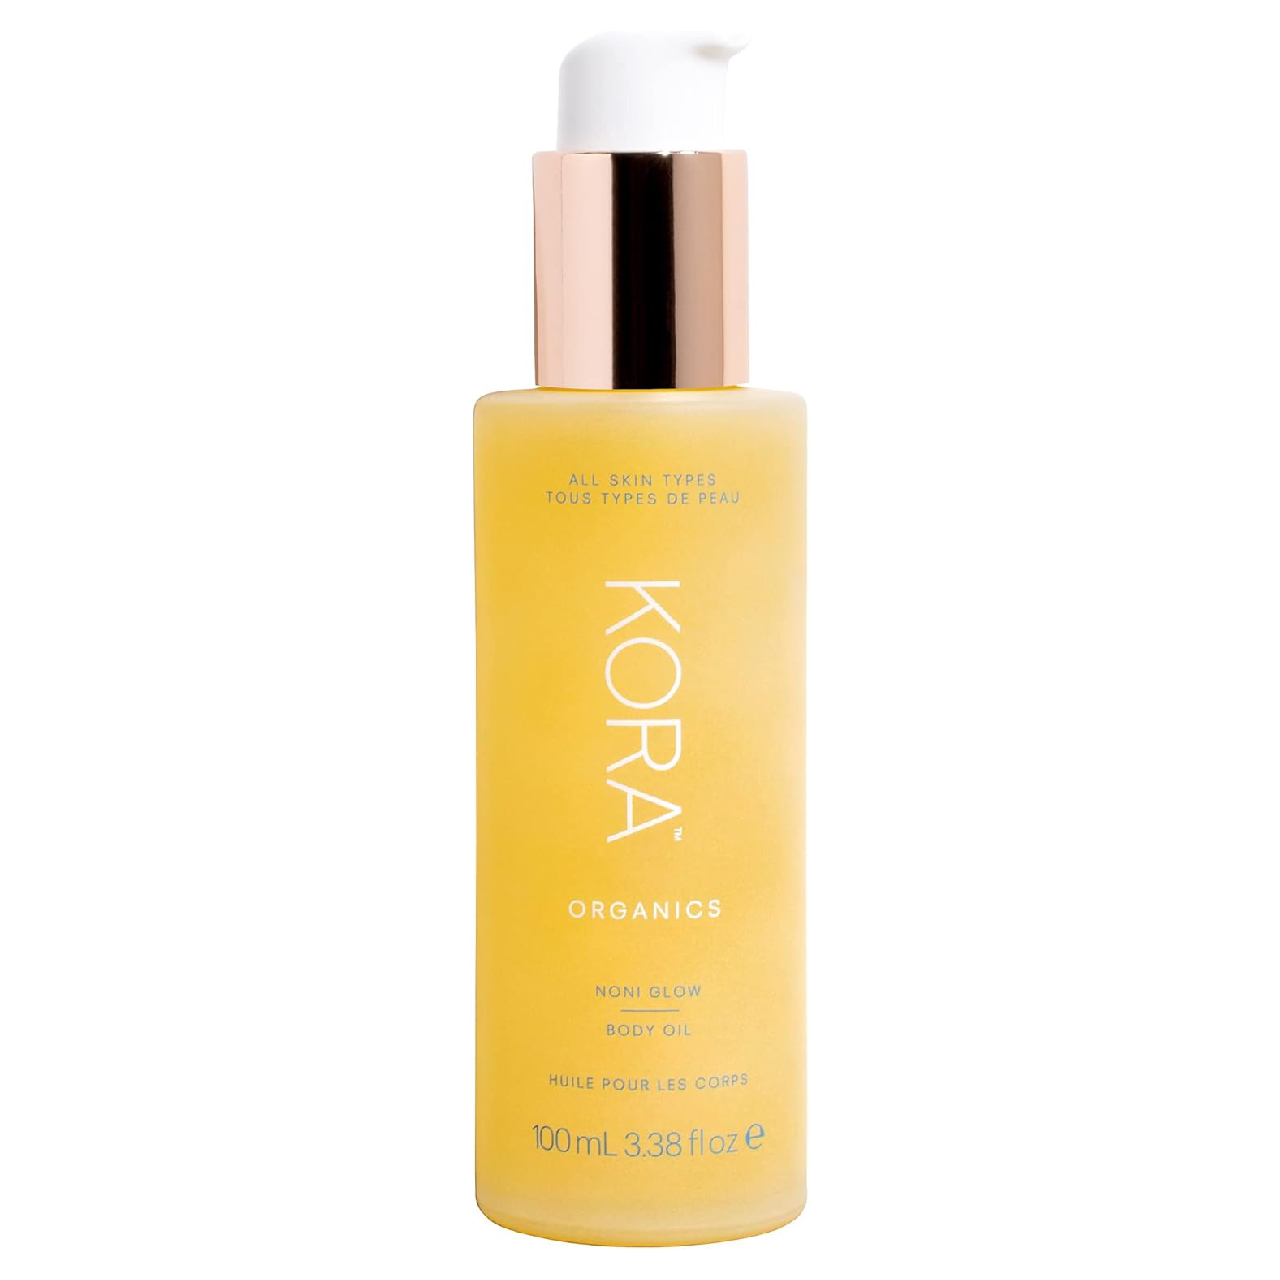 Elegant bottle of KORA Organics Noni Glow Body Oil displayed on a soft backdrop